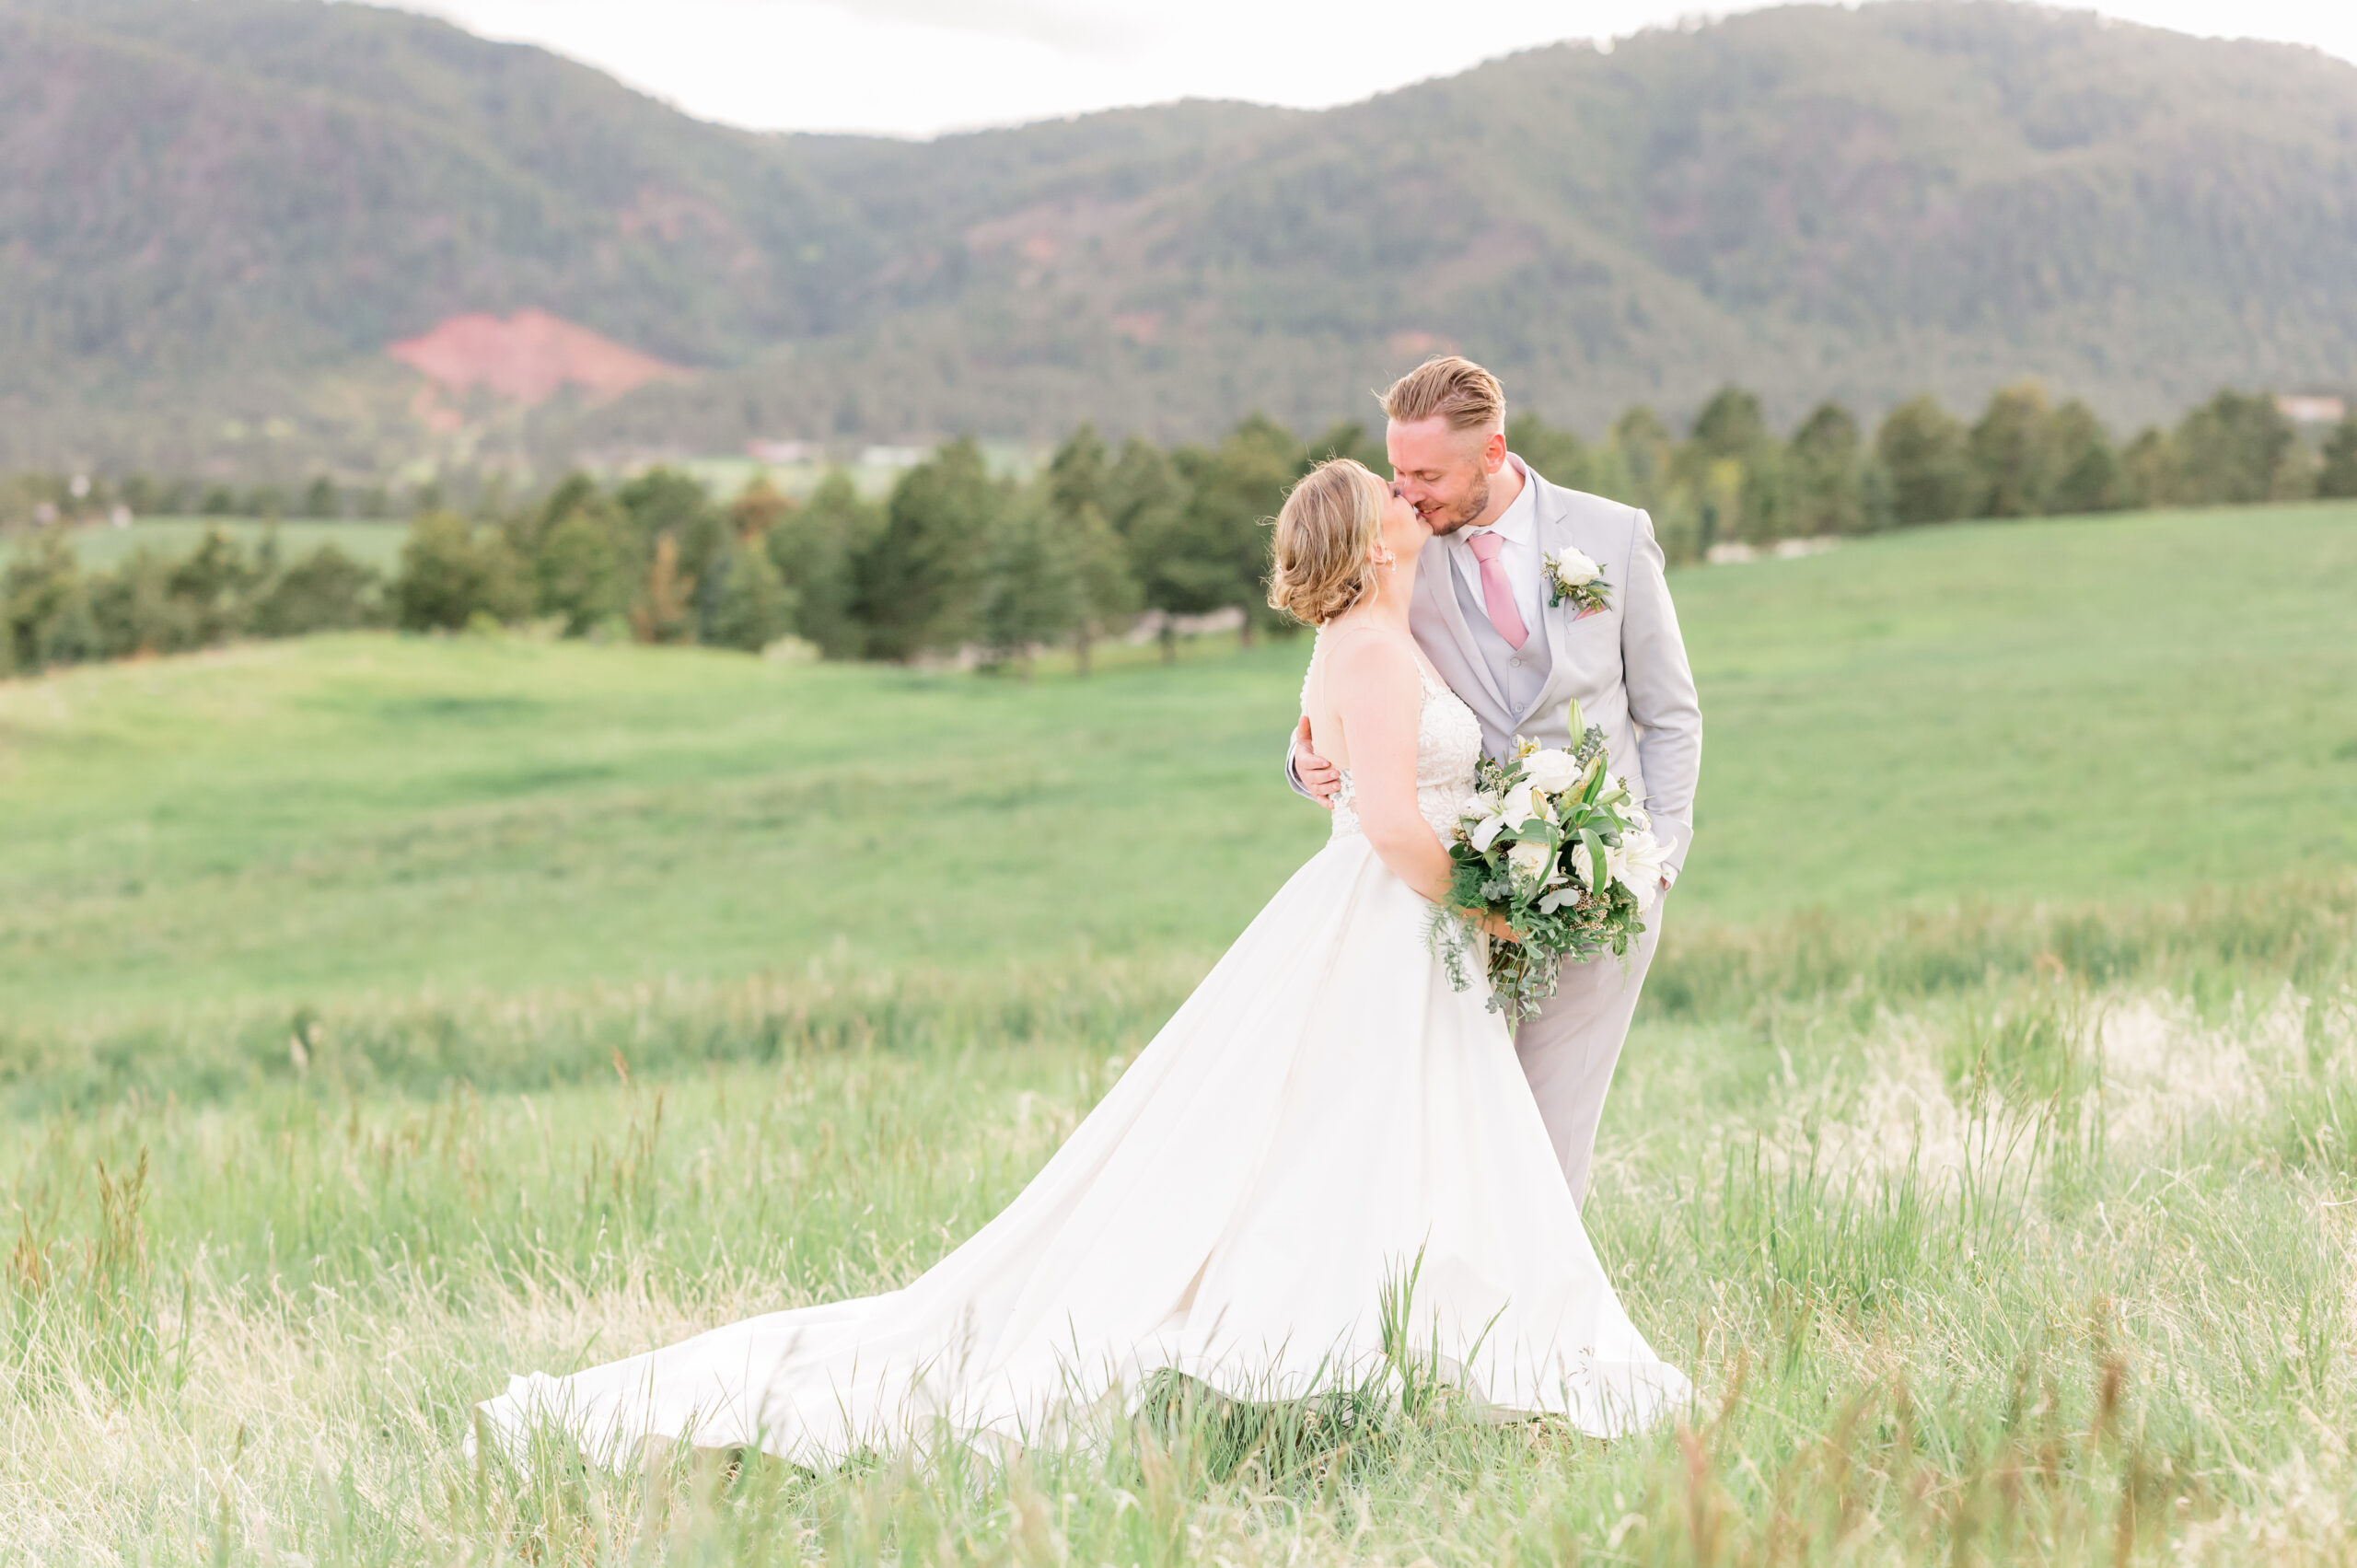 Kiani + Dalton Wedding at Spruce Mountain | Britni Girard Photography